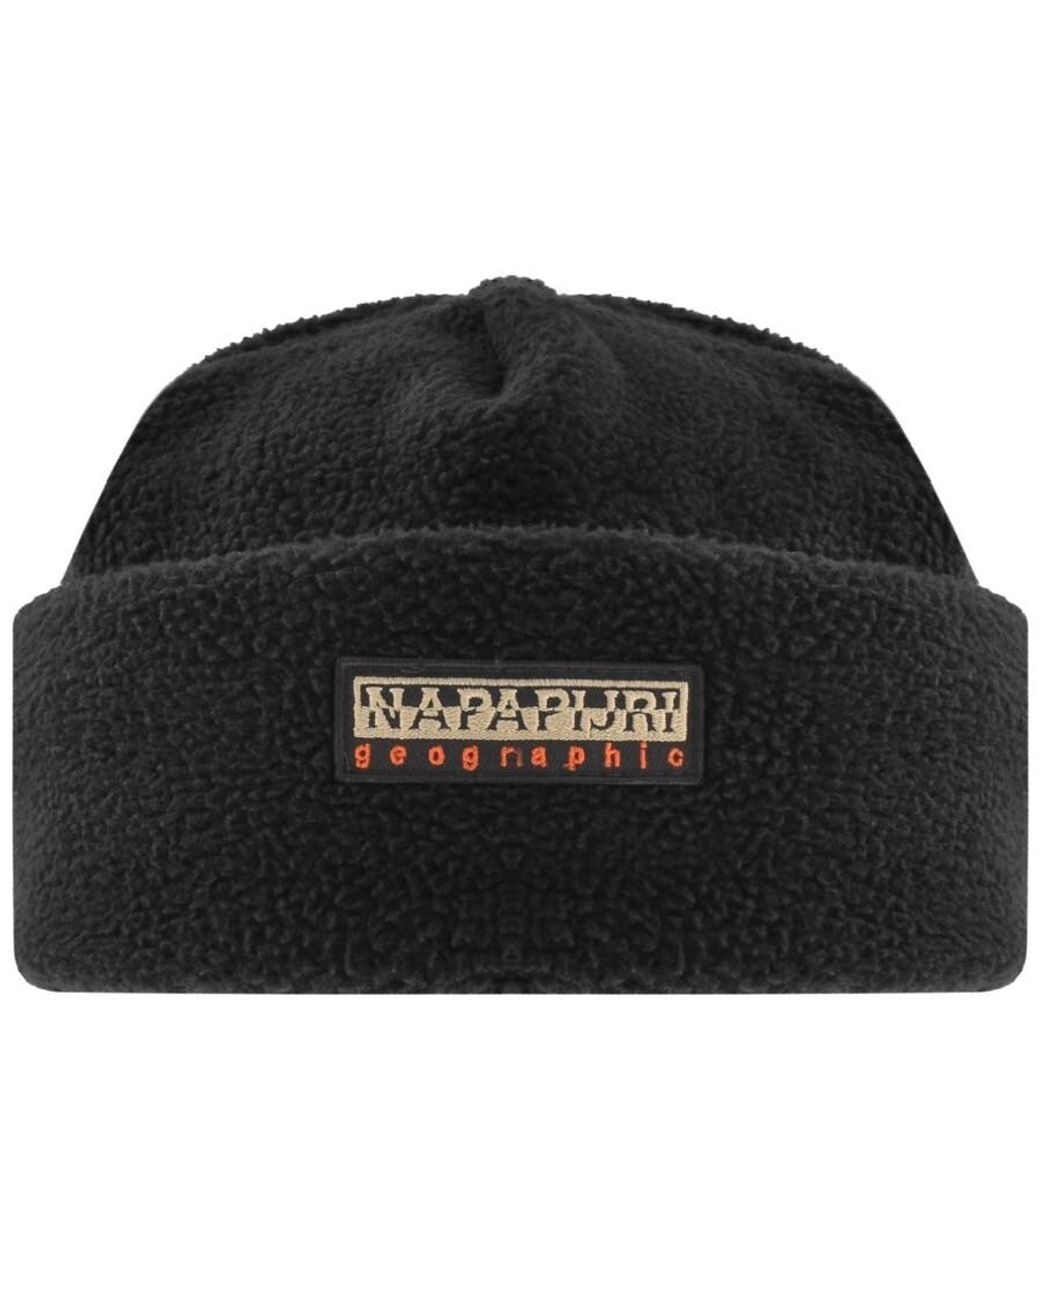 Napapijri F Rock 1 Beanie Hat in Black for Men | Lyst